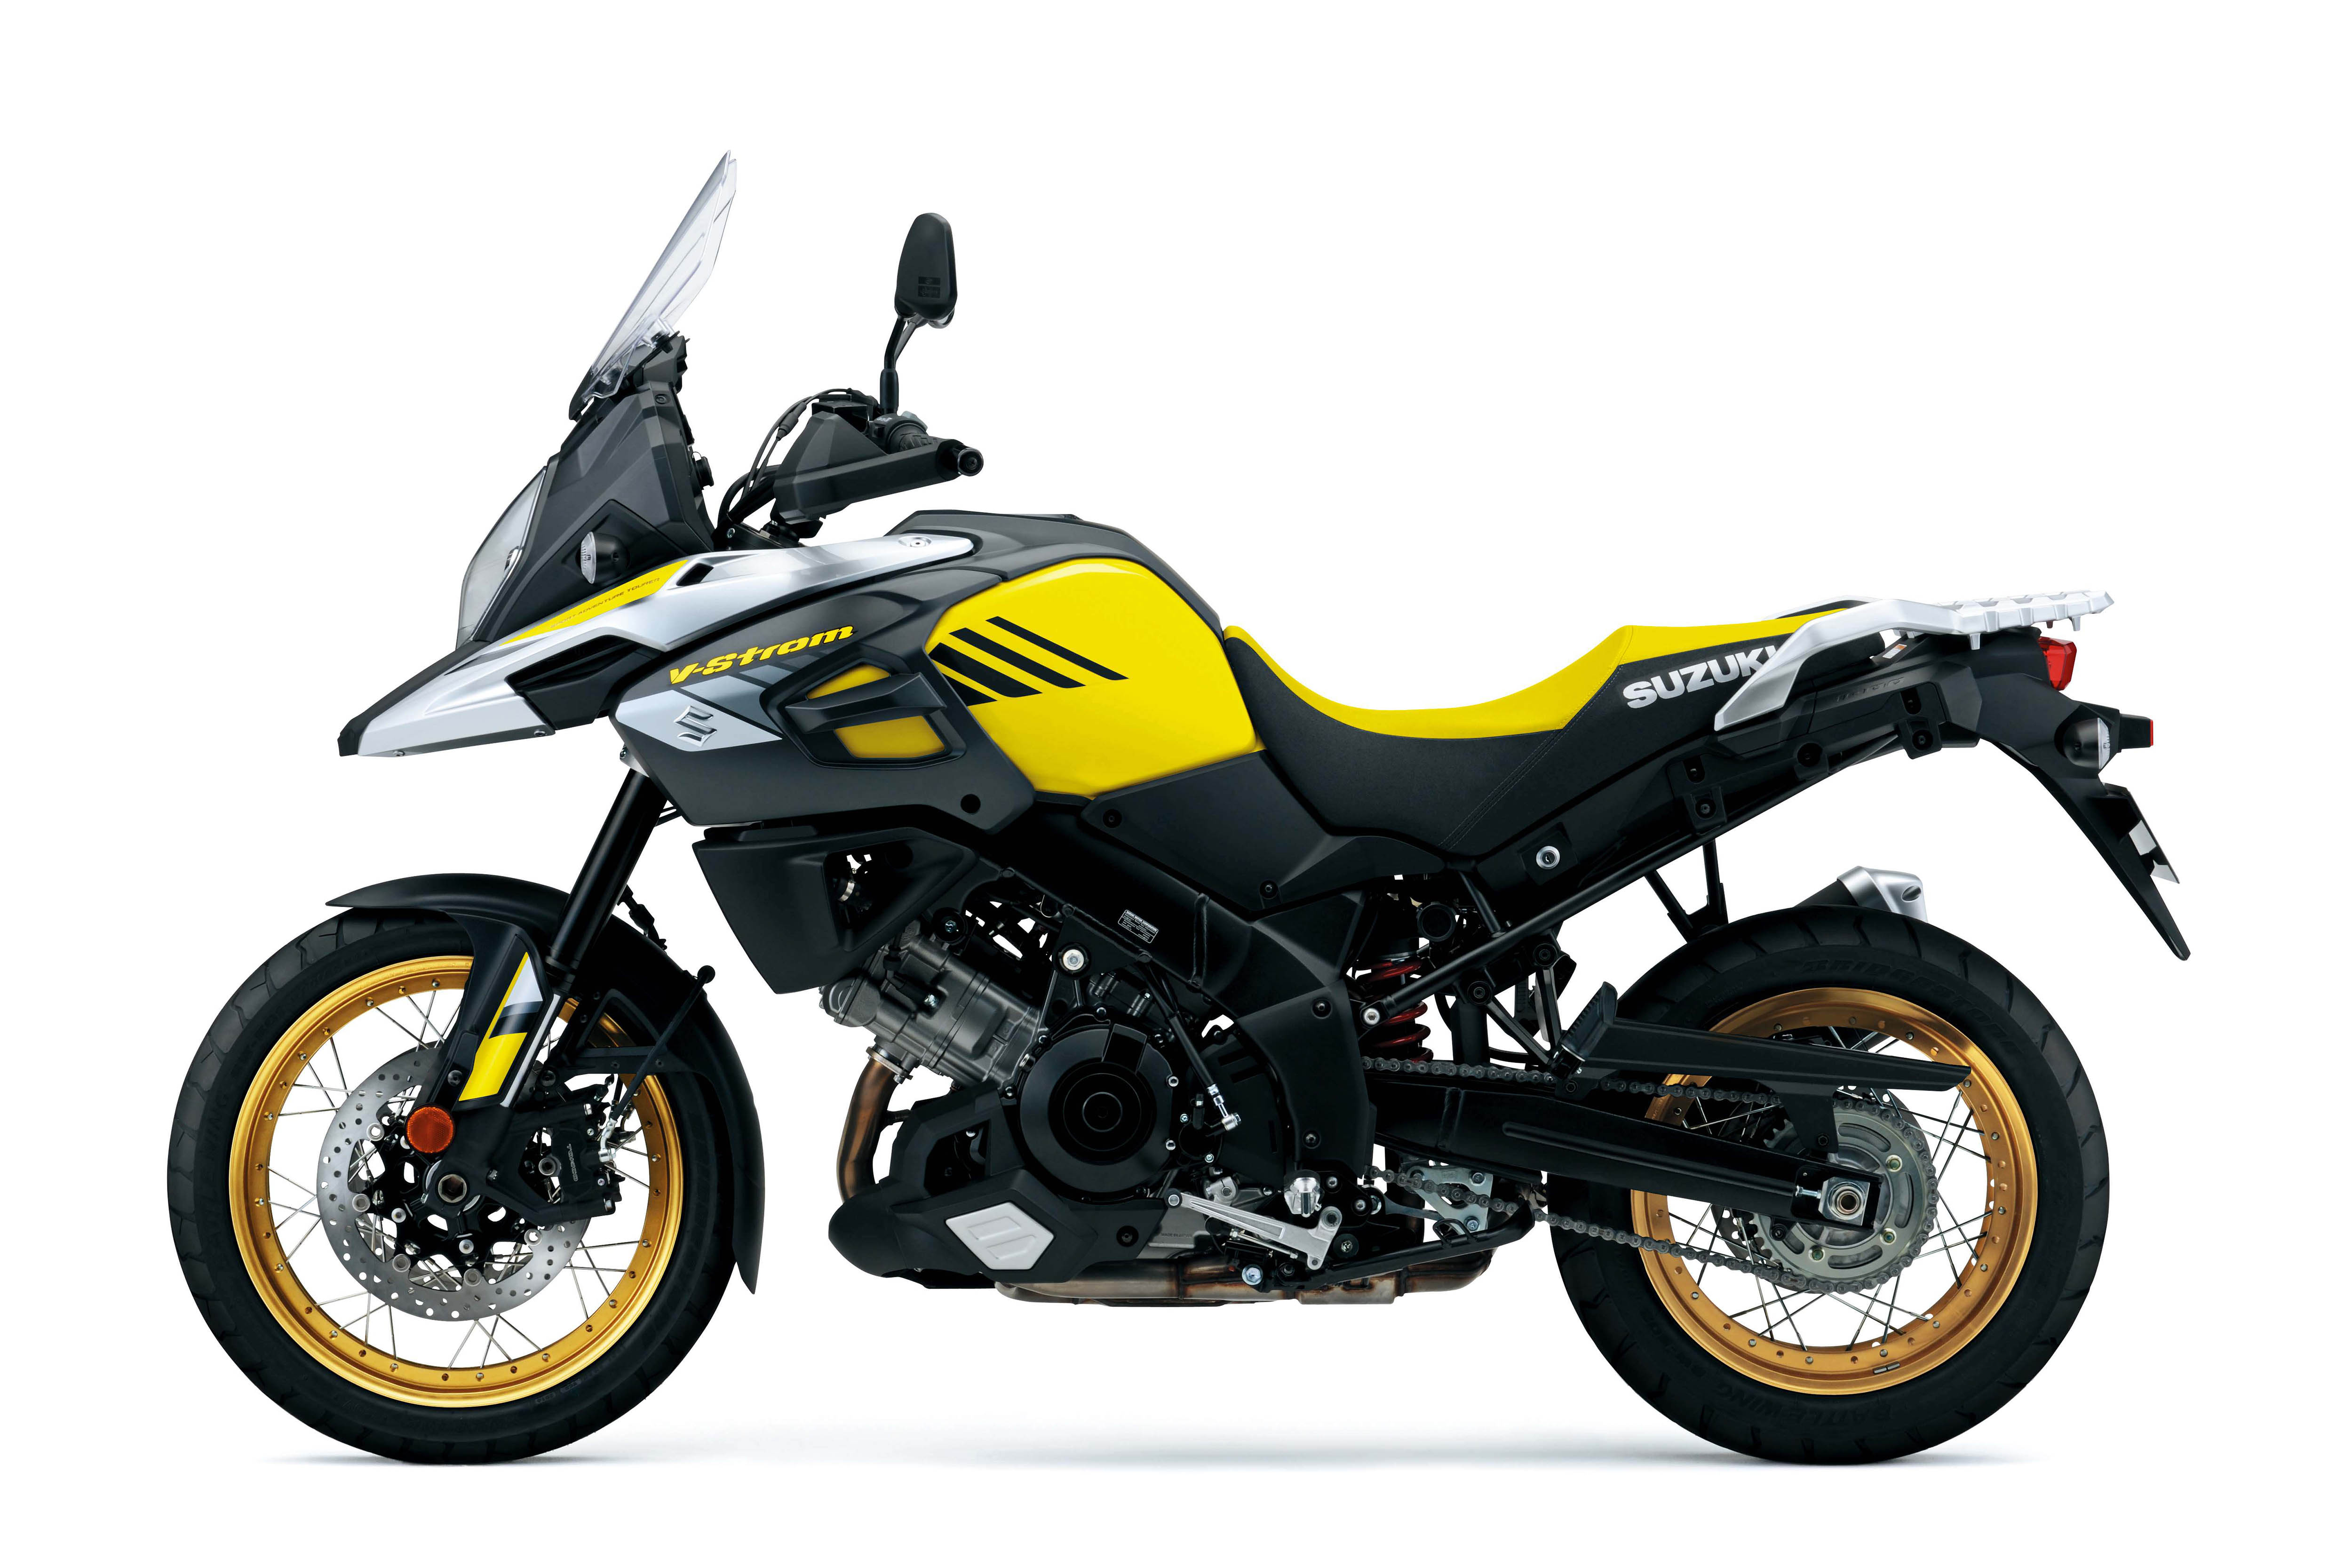 VSTROM 1000 2018 Motos Suzuki Precio S/ 50,000